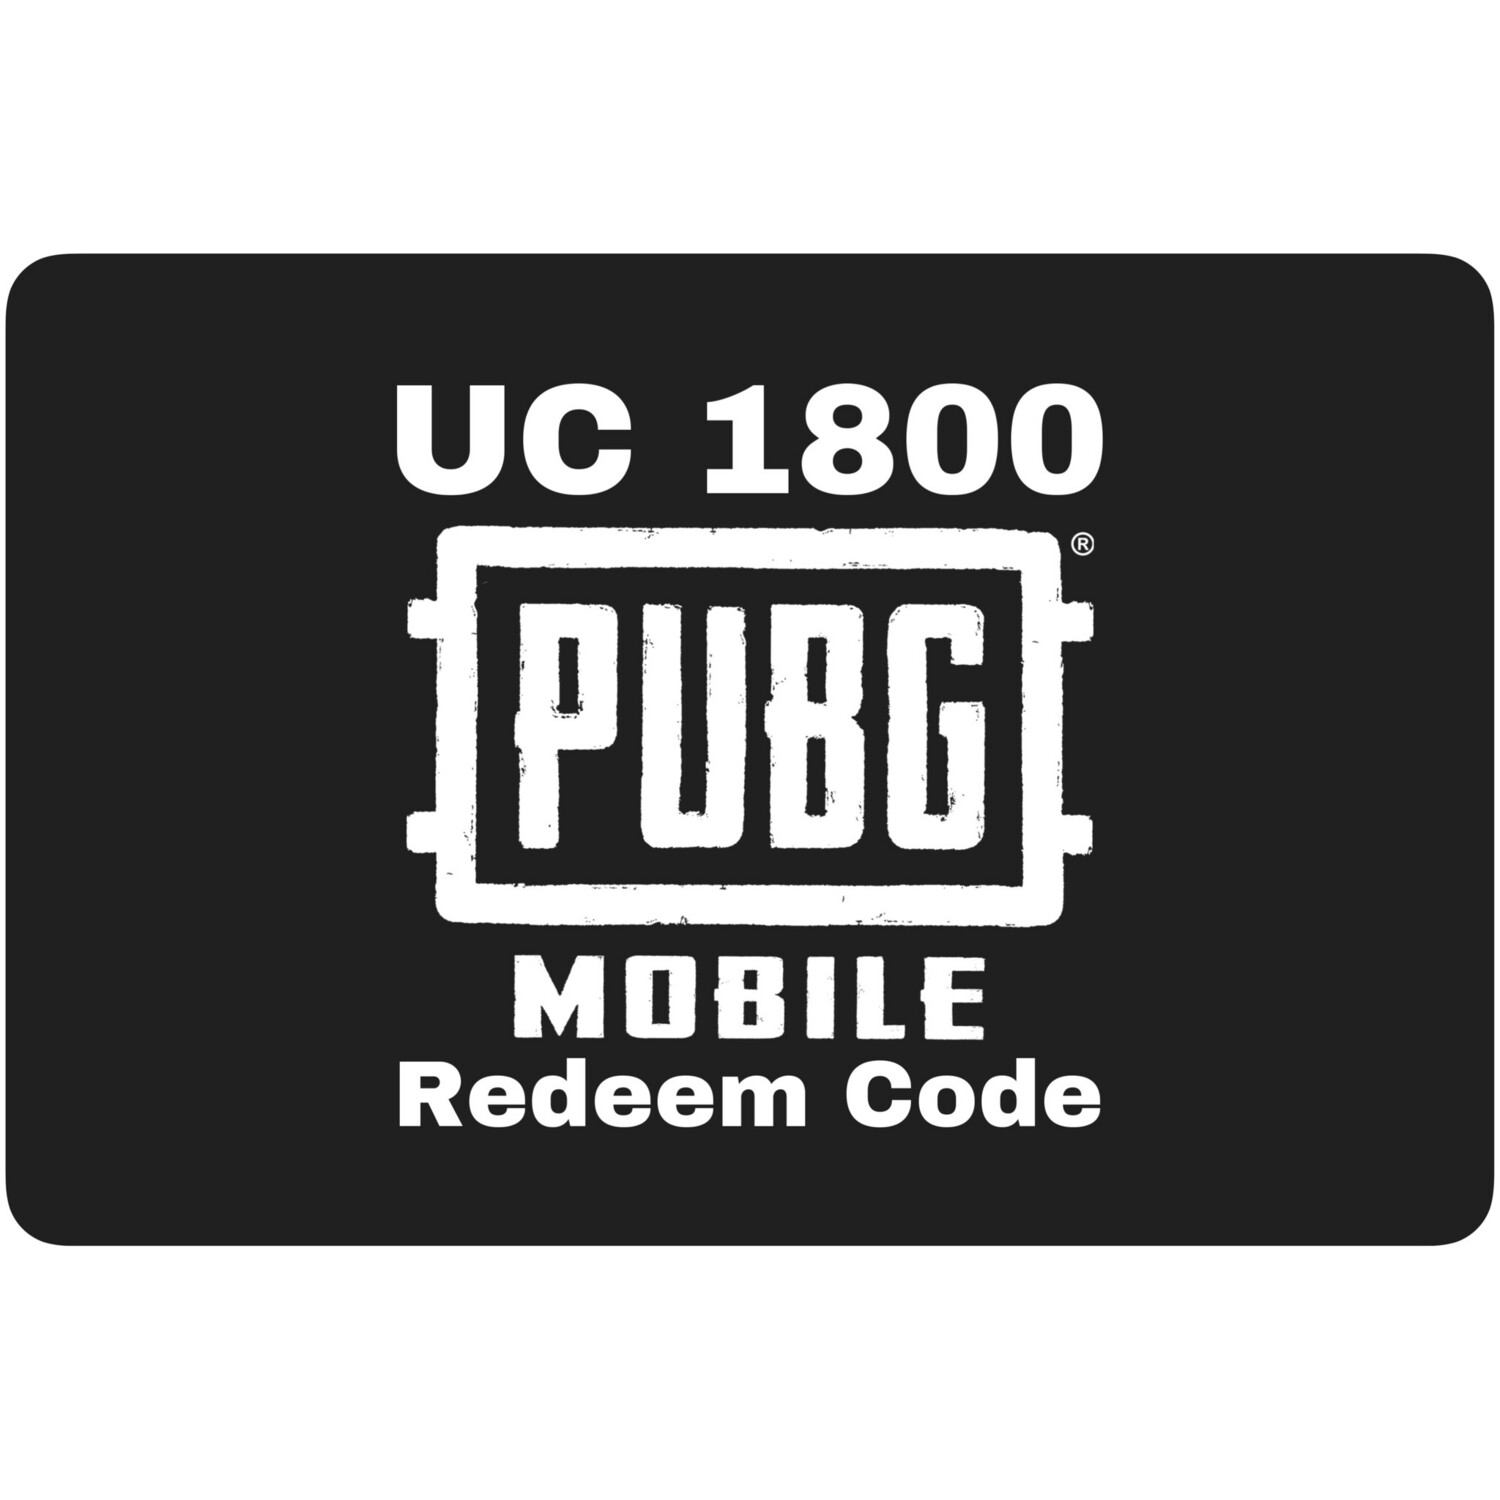 PUBG Mobile UC 1800 Redeem Code